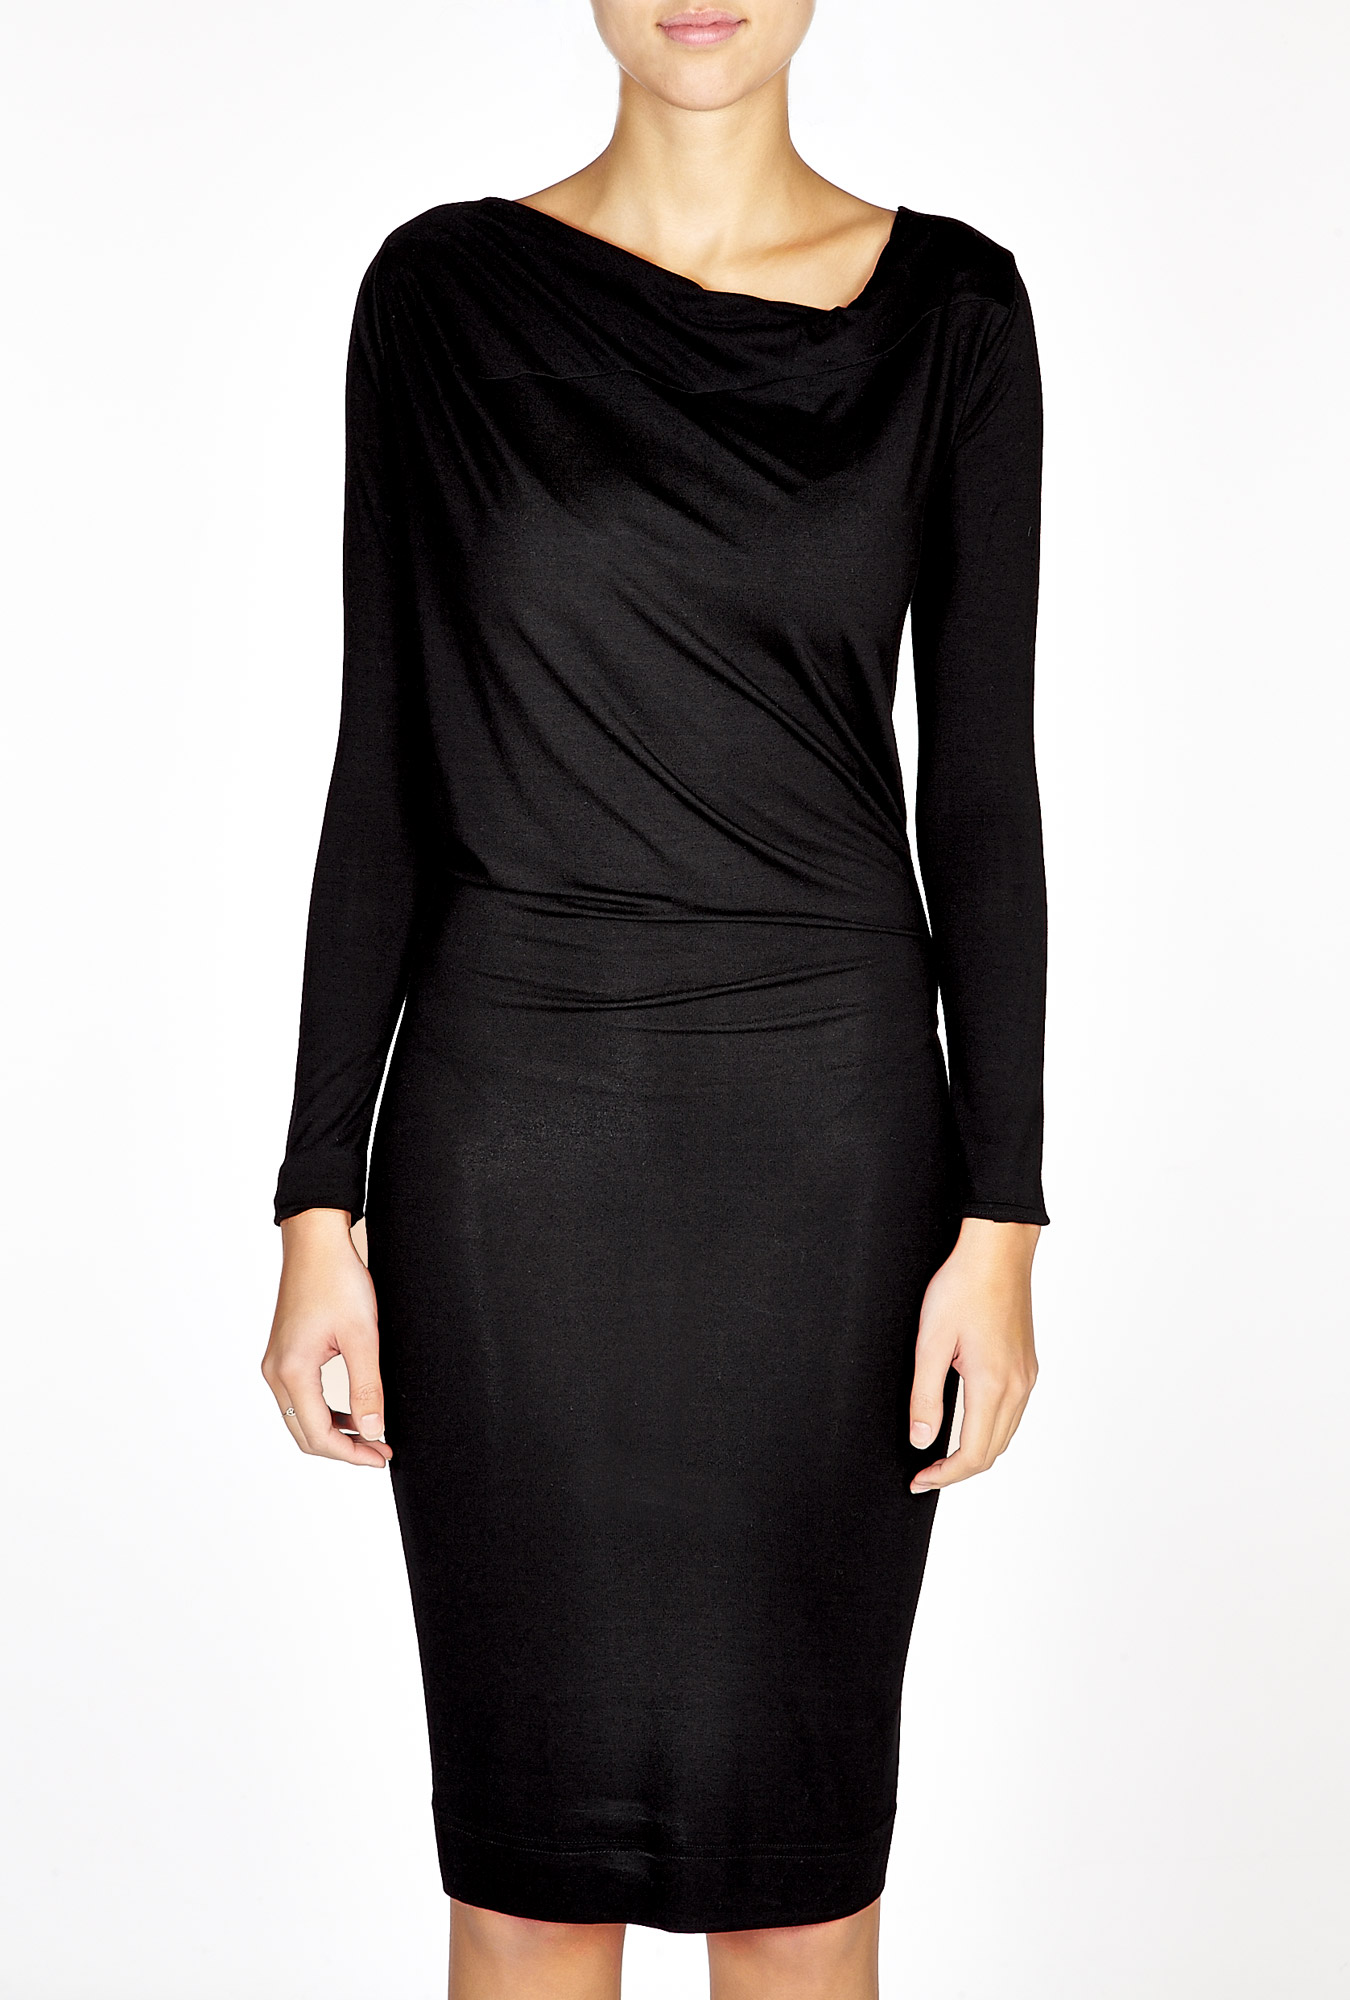 Vivienne Westwood Anglomania Long Sleeve Draped Boudicca Dress in Black ...